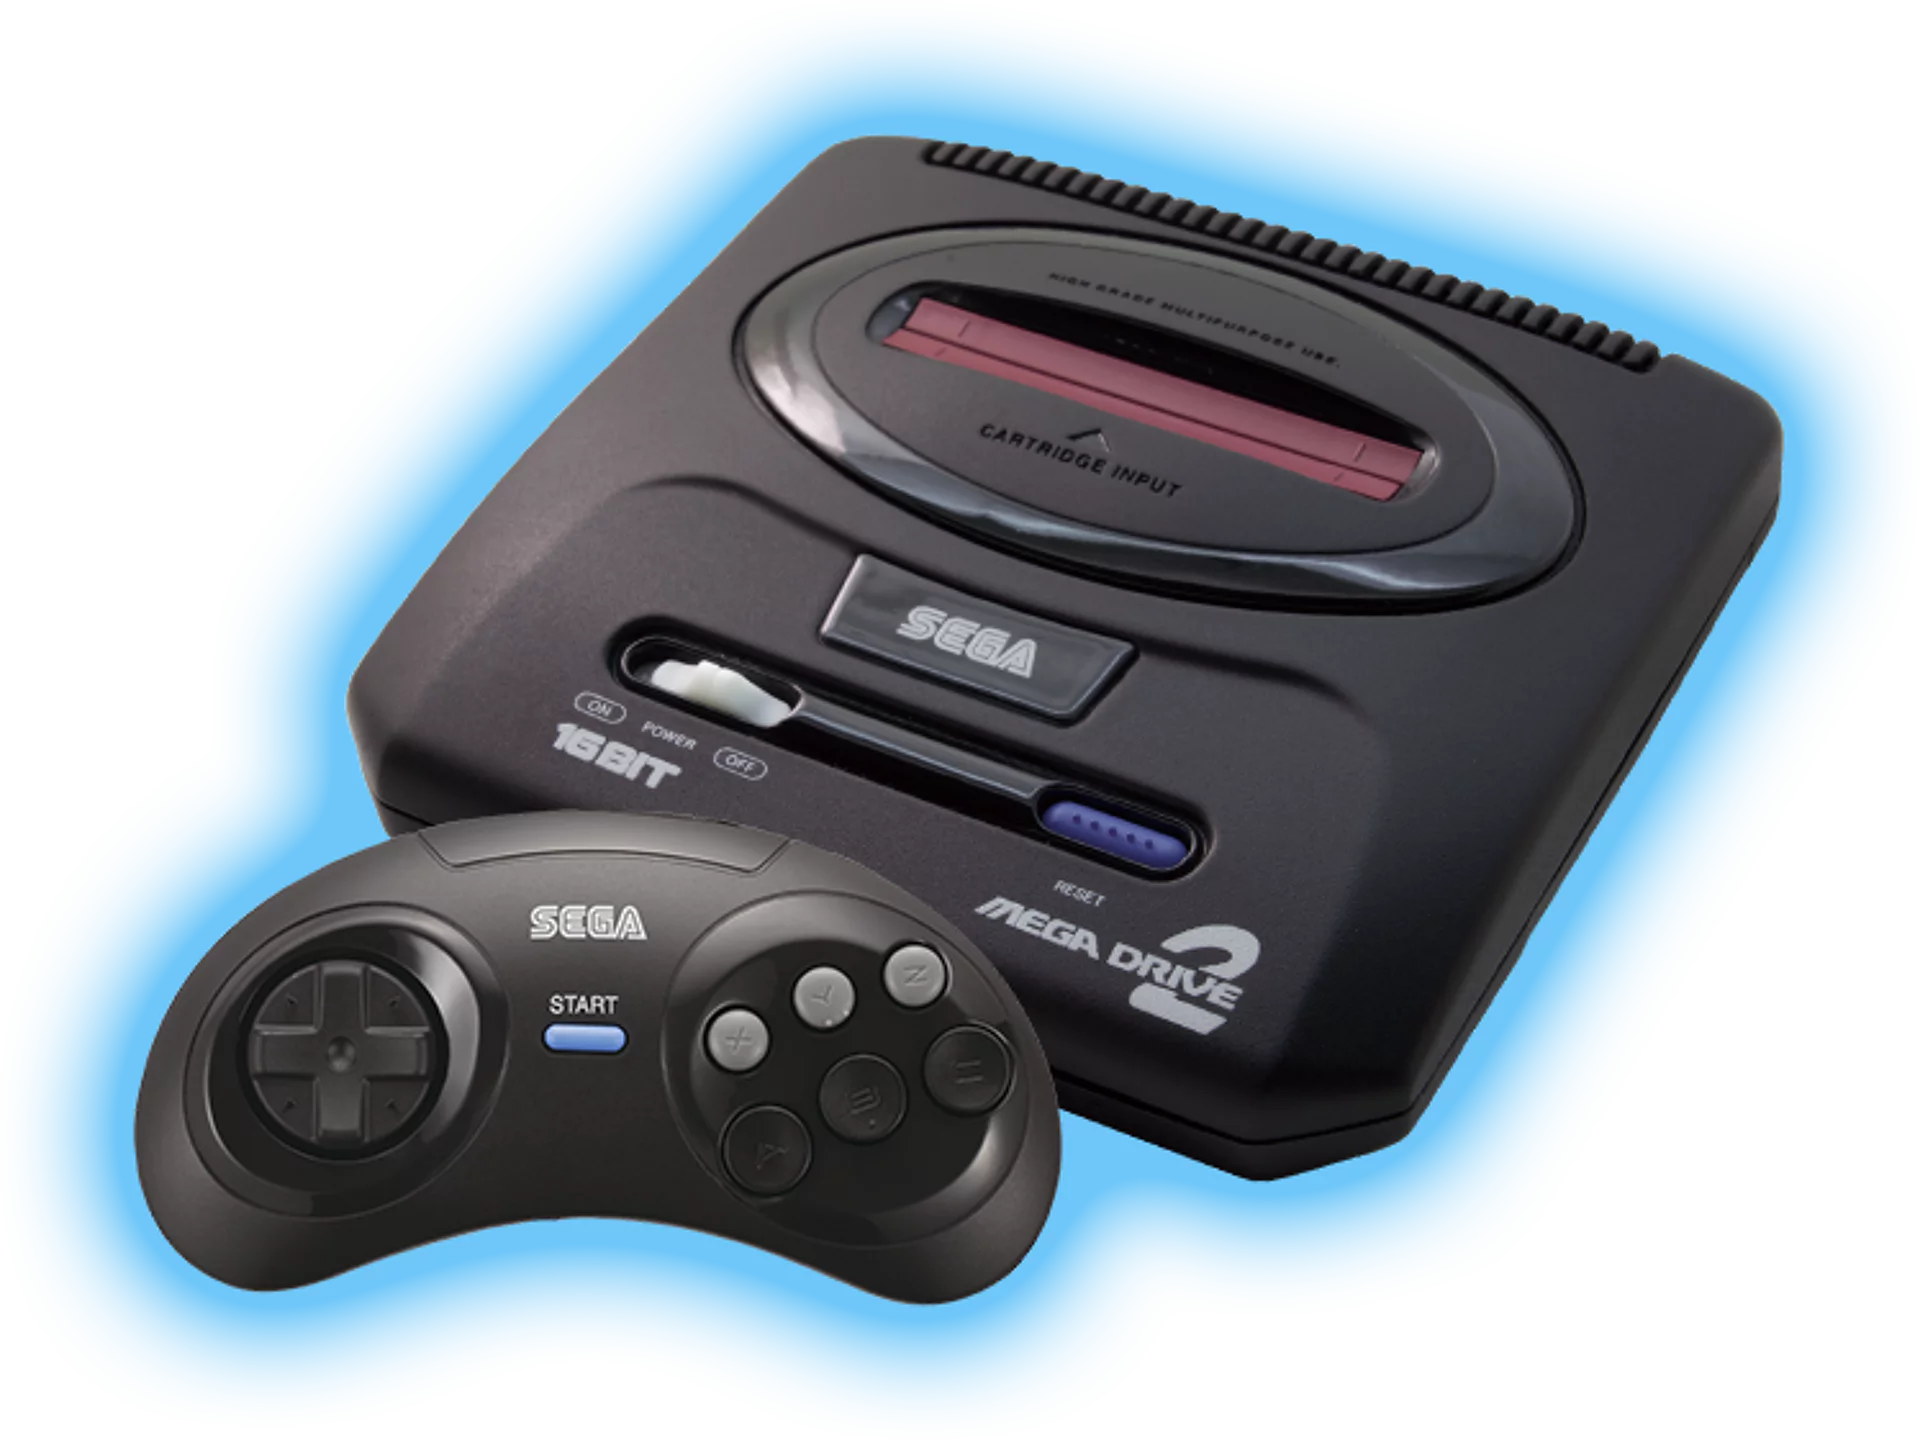 Игры сега мега драйв 2. Mega Drive Mini 2. Megadrive 2 Mini. Sega Mega Drive 2 Mini. Sega Megadrive 2 Mini.